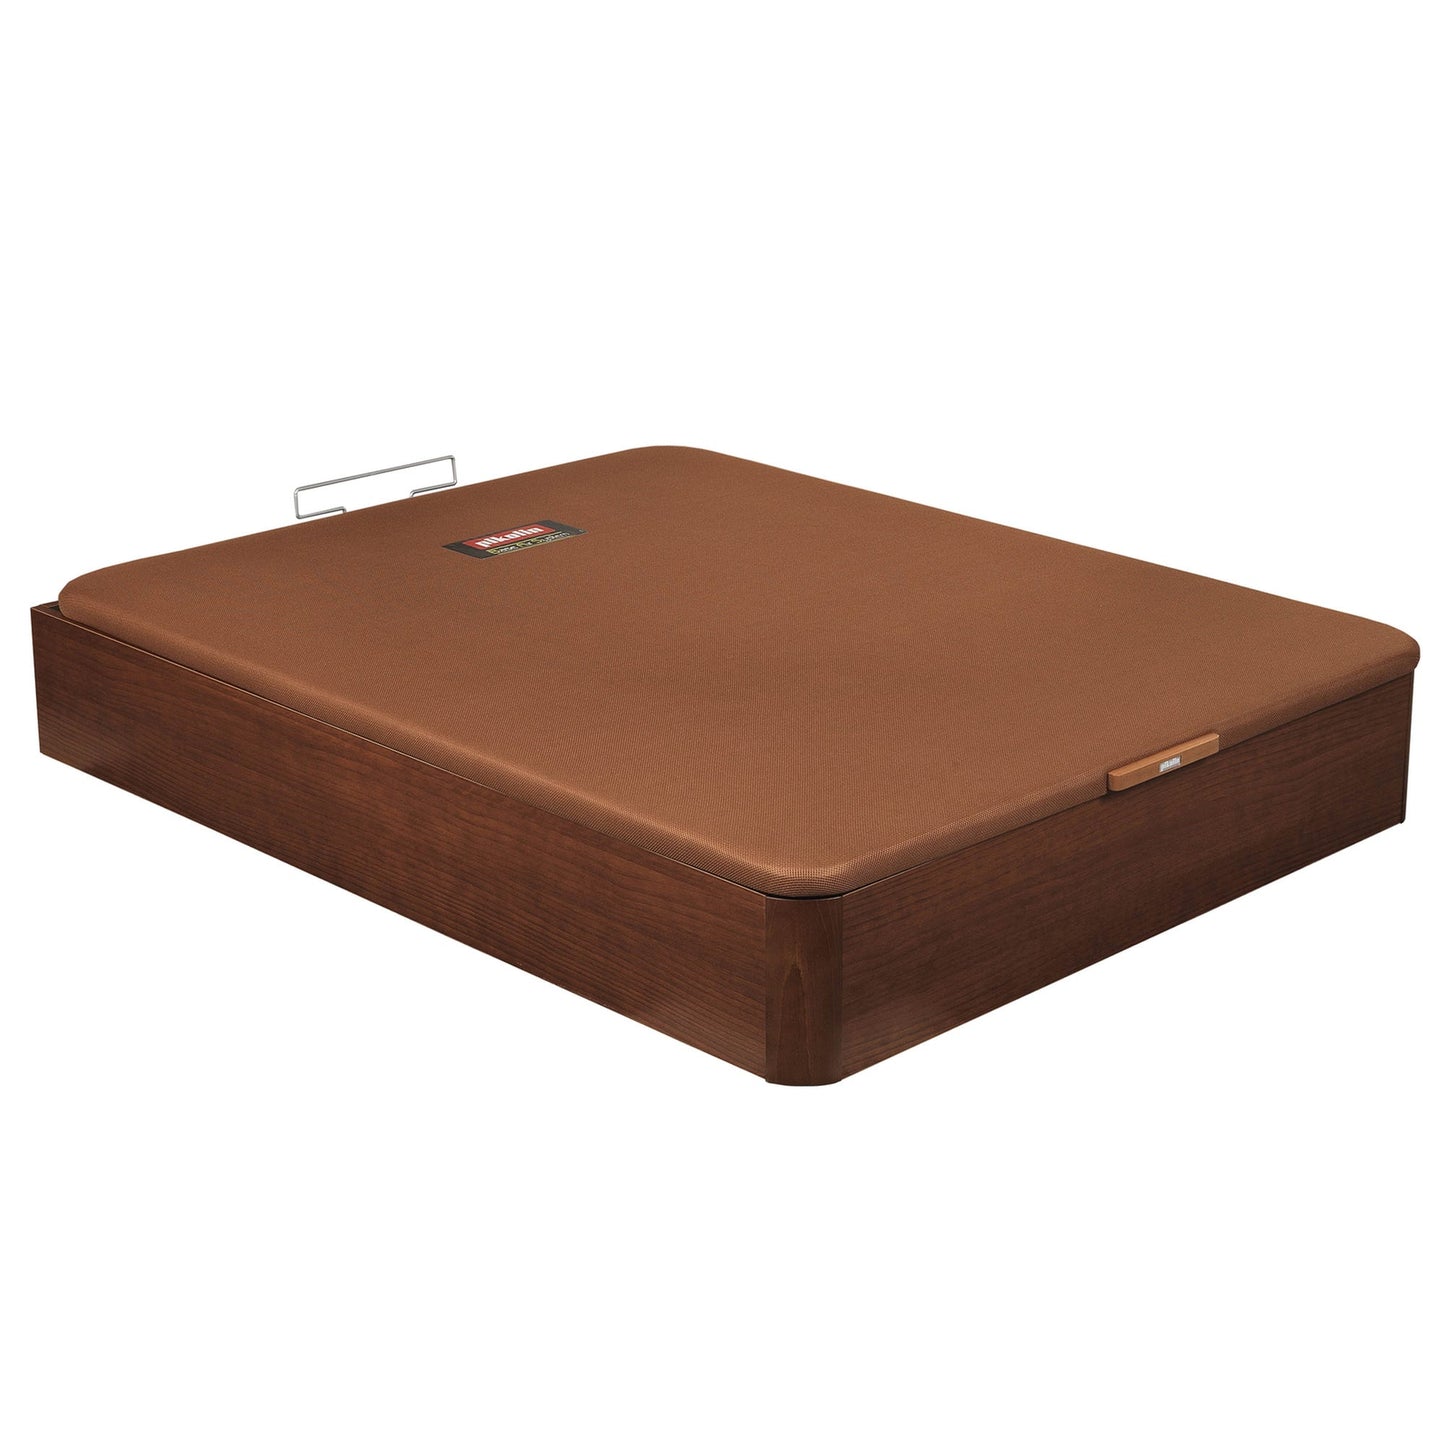 Canapé abatible de madera de color cerezo - NATURBOX CEREZO - 160x190